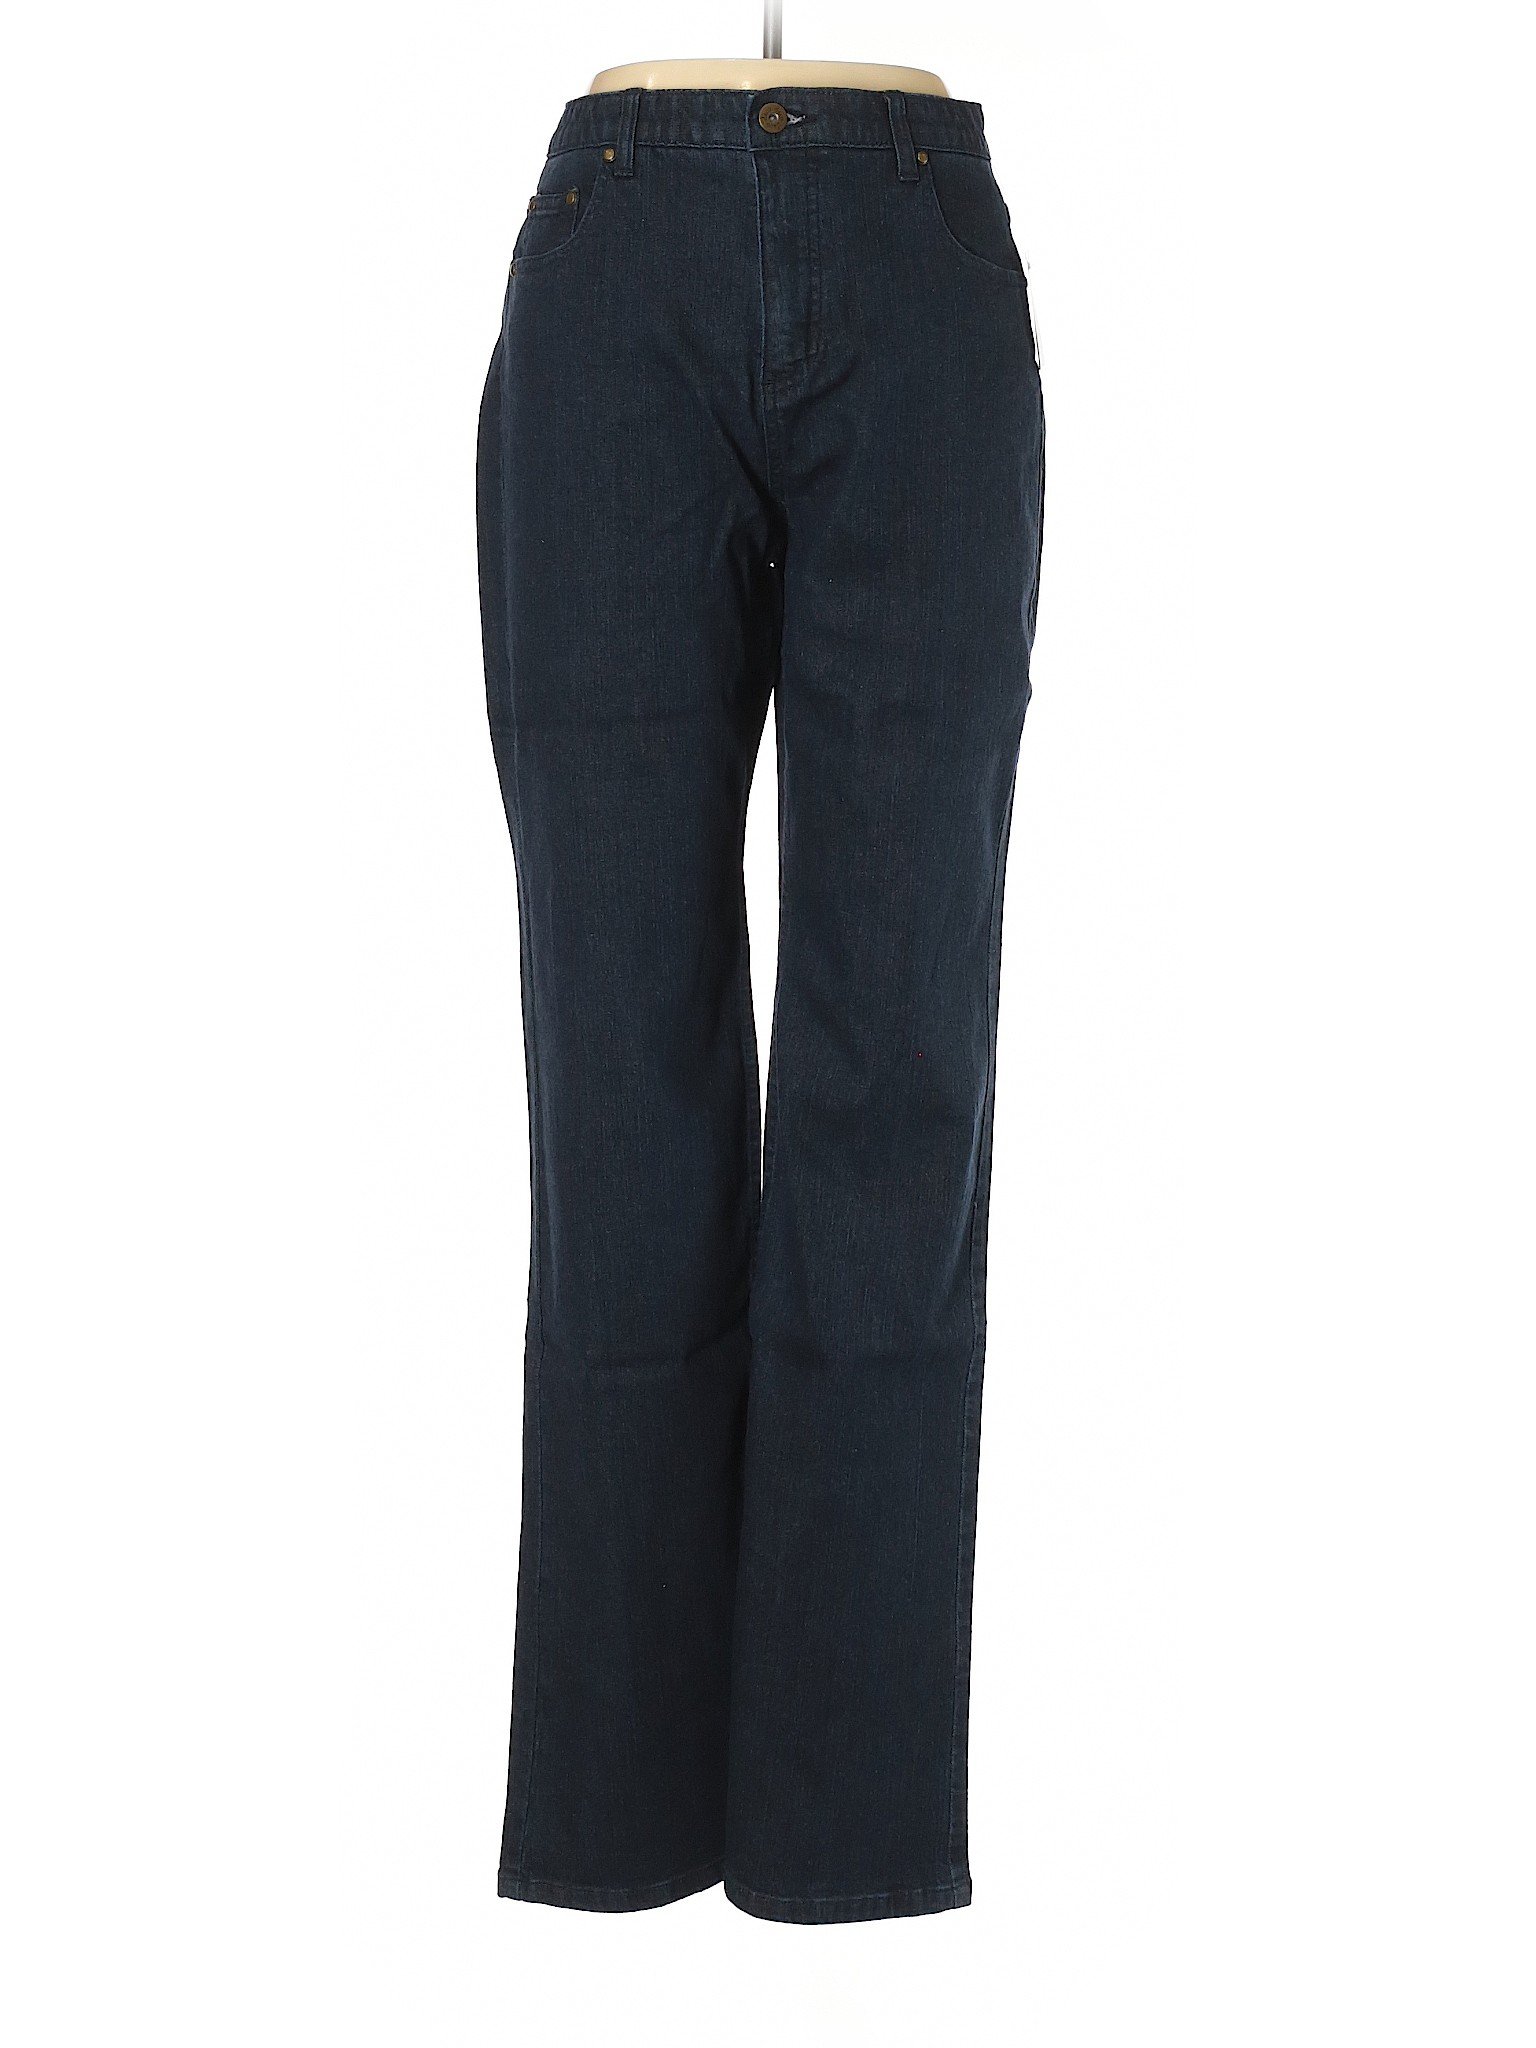 Denim & Co Blue Jeans Size 12 (Tall) - 60% off | thredUP